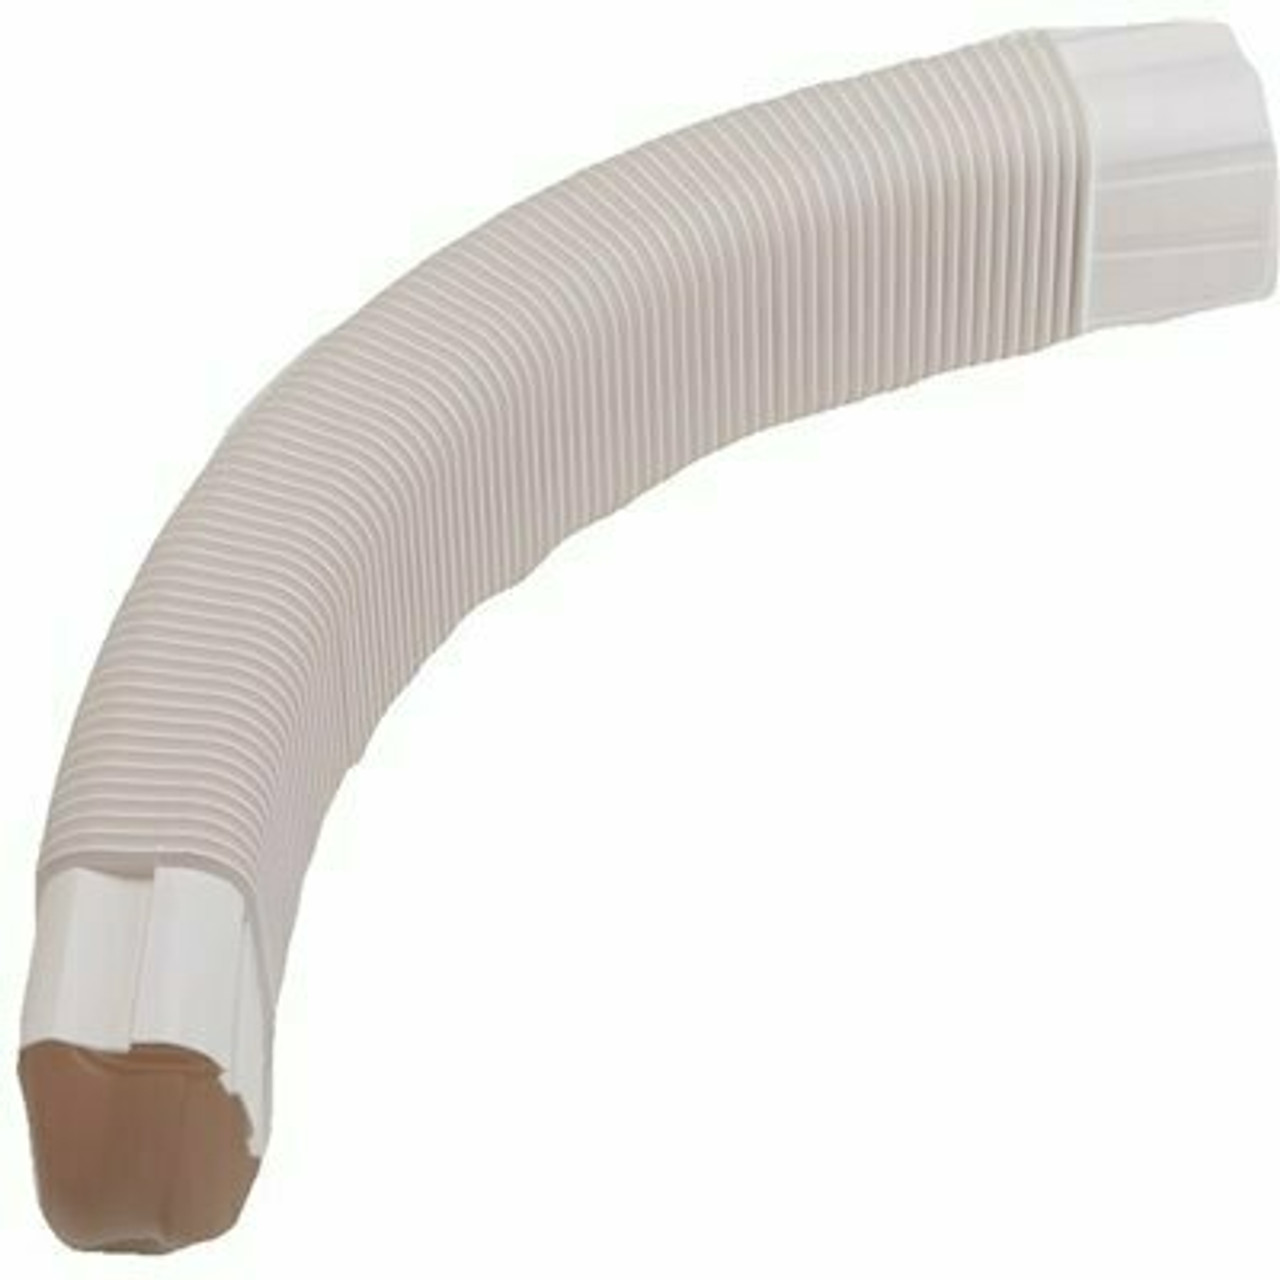 Rectorseal Slimduct Flex Elbow In White